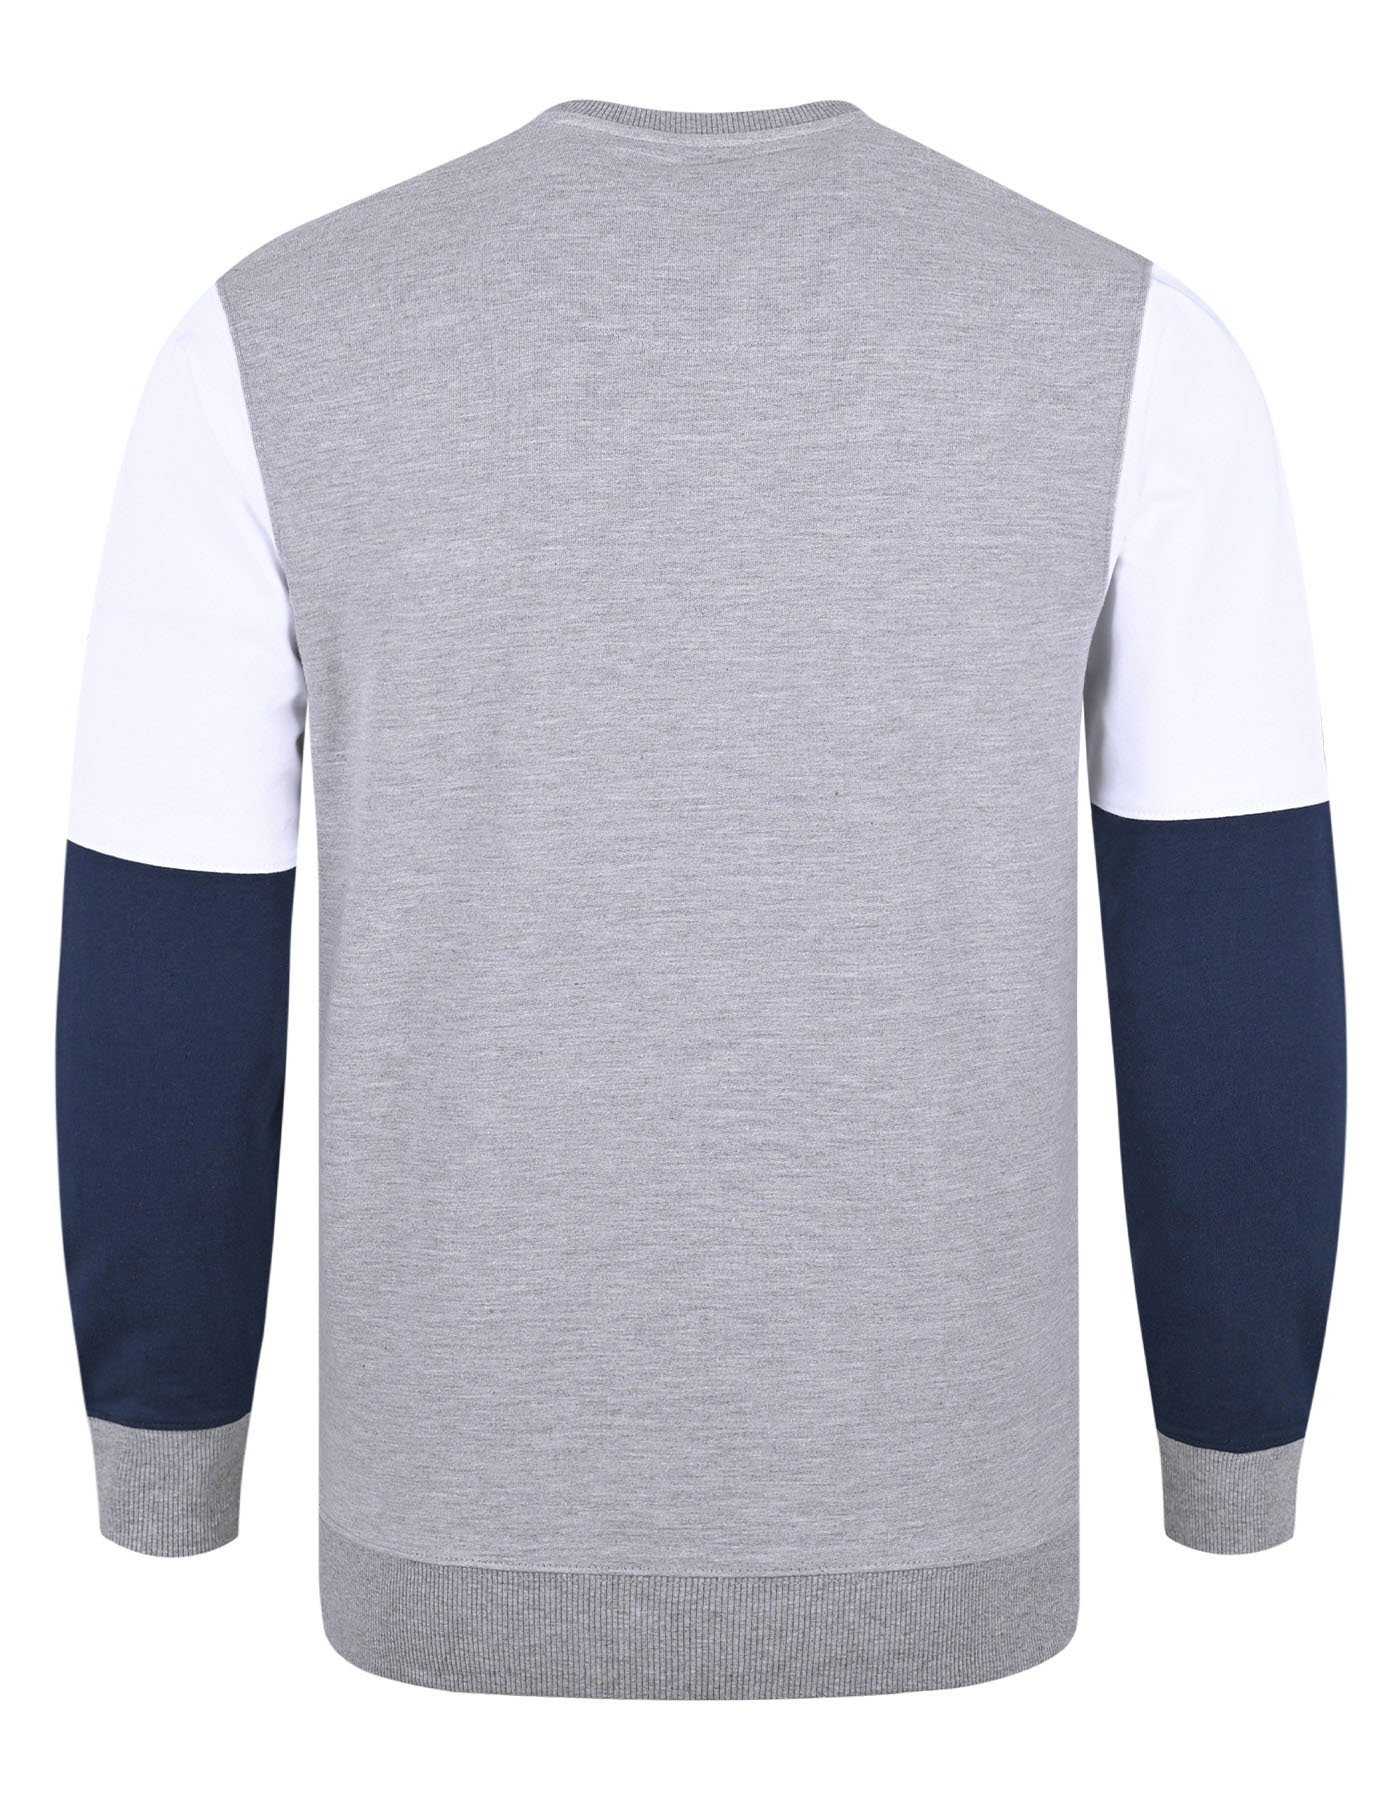 Sweat Shirt Grey/White S TSS2378 Uniworth Cut n Sew